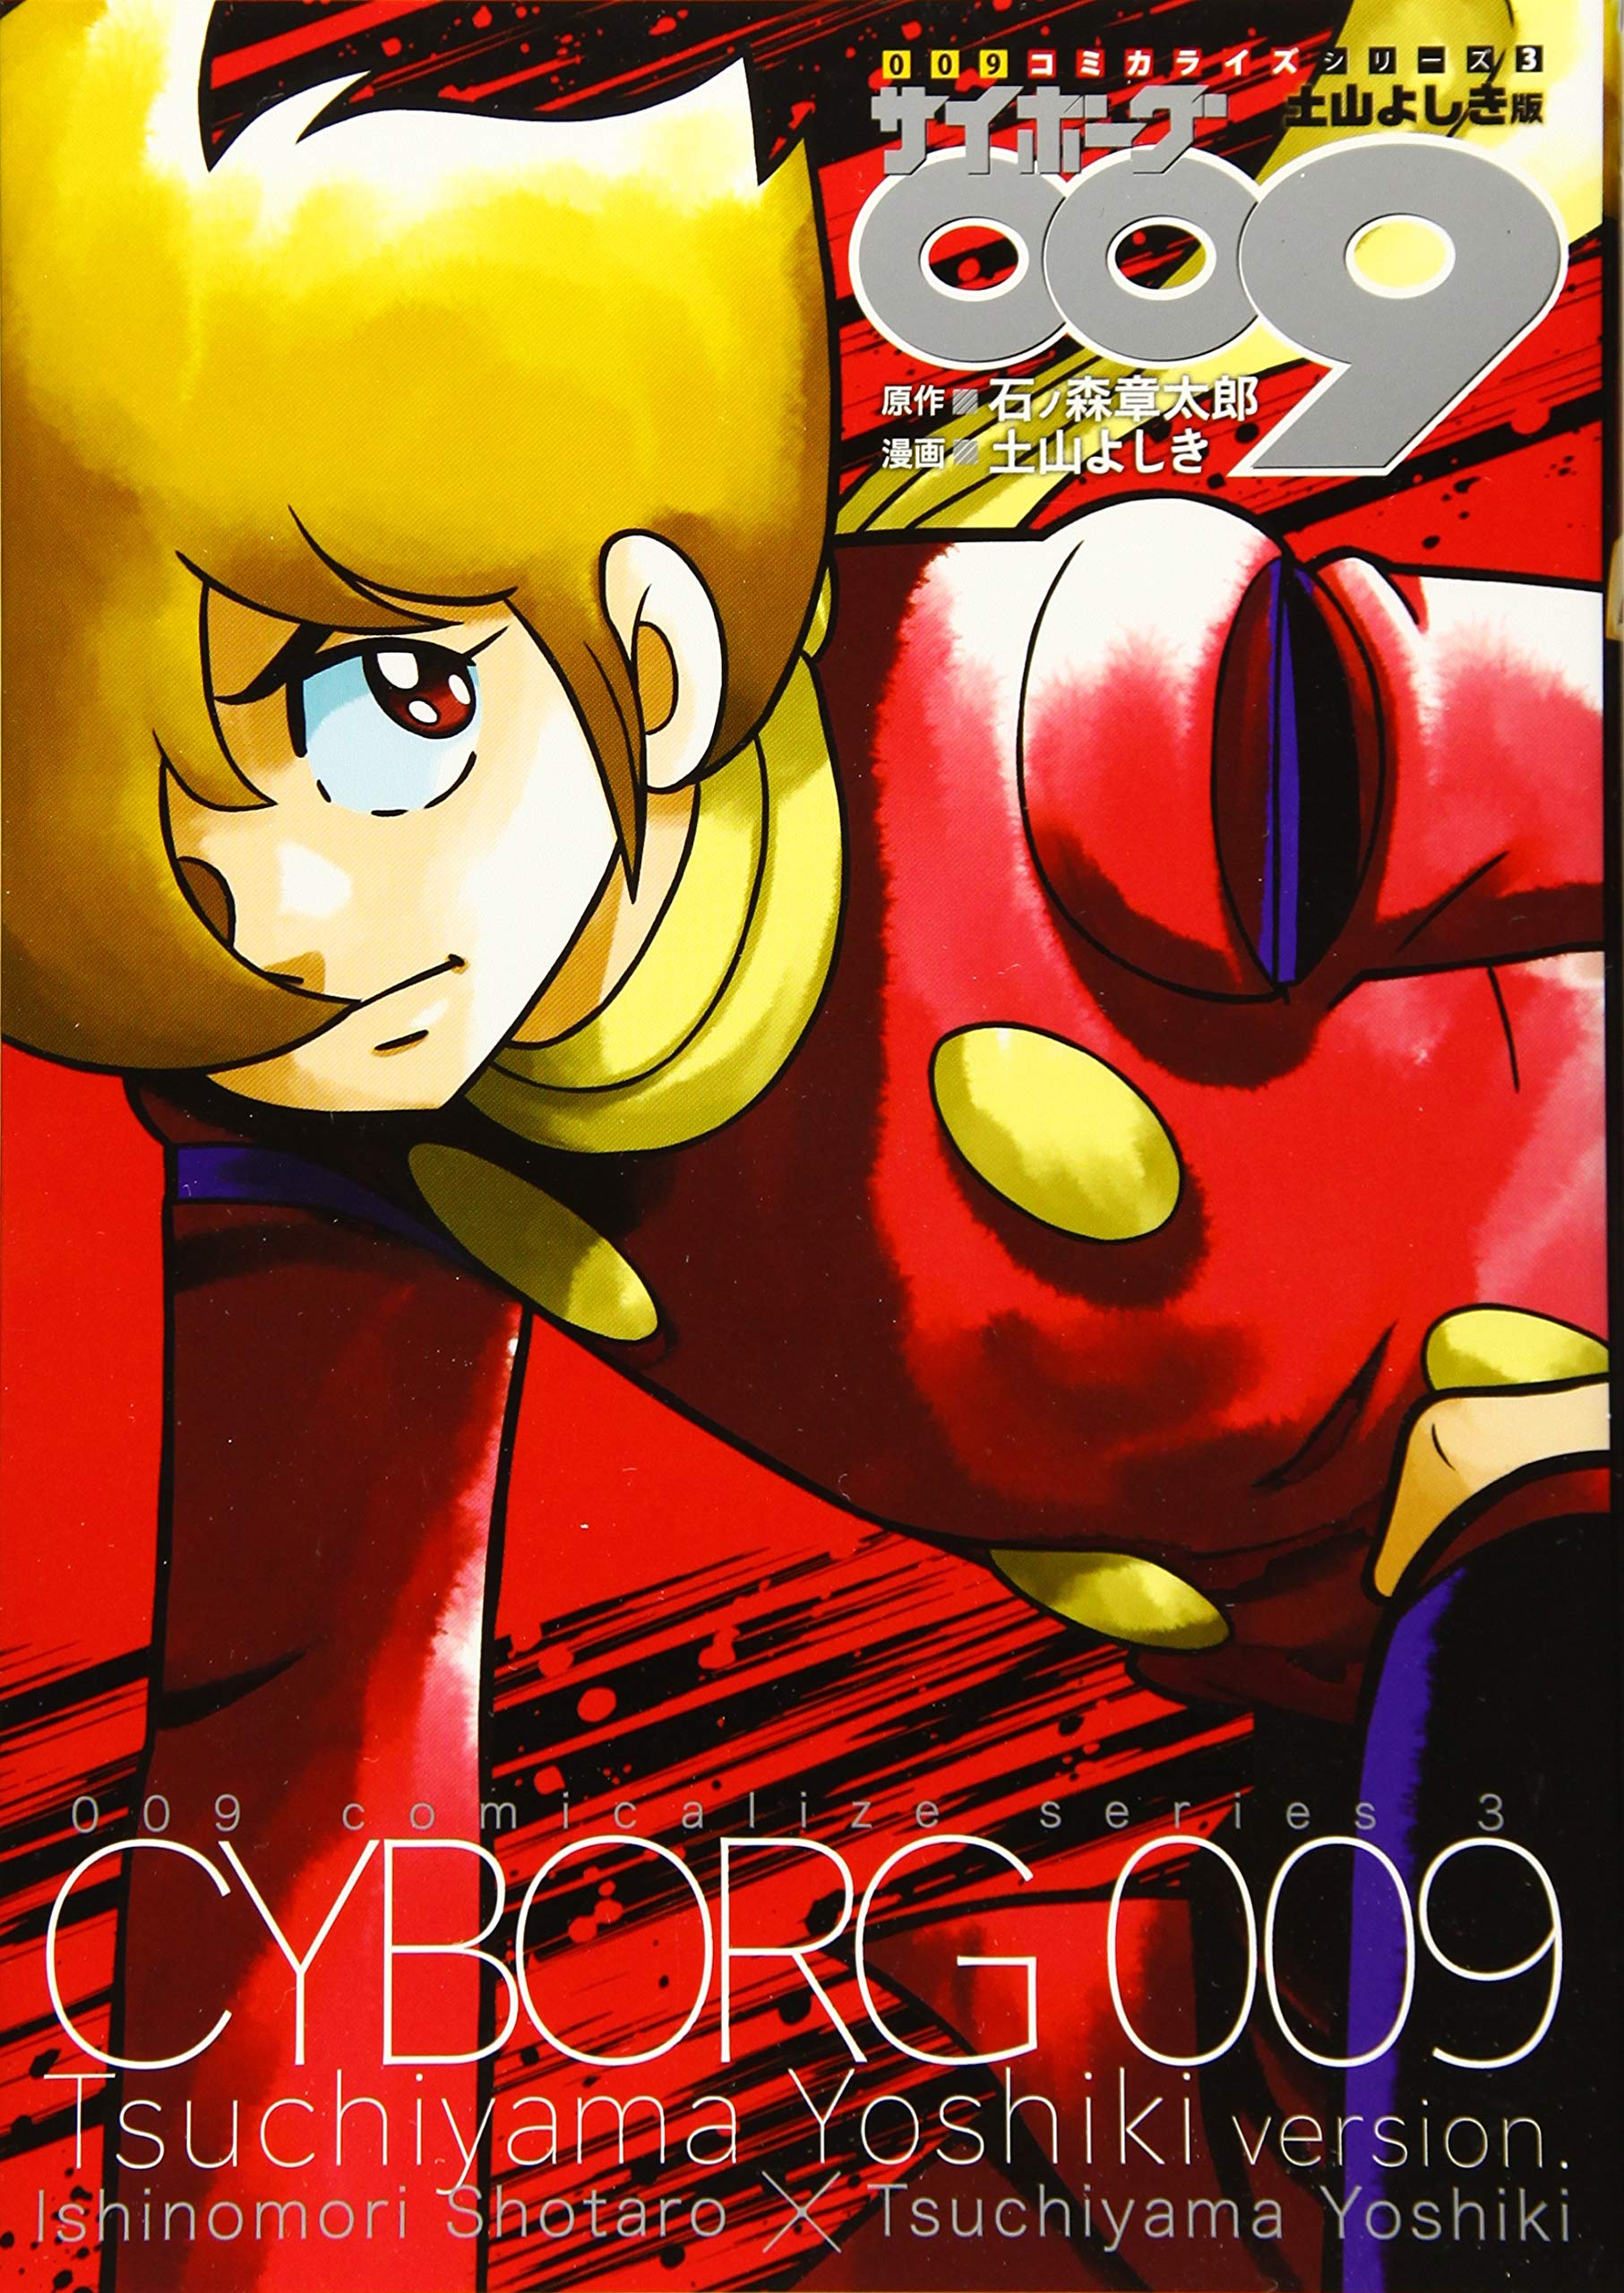 Cyborg 009 (TSUCHIYAMA Yoshiki) - MangaDex